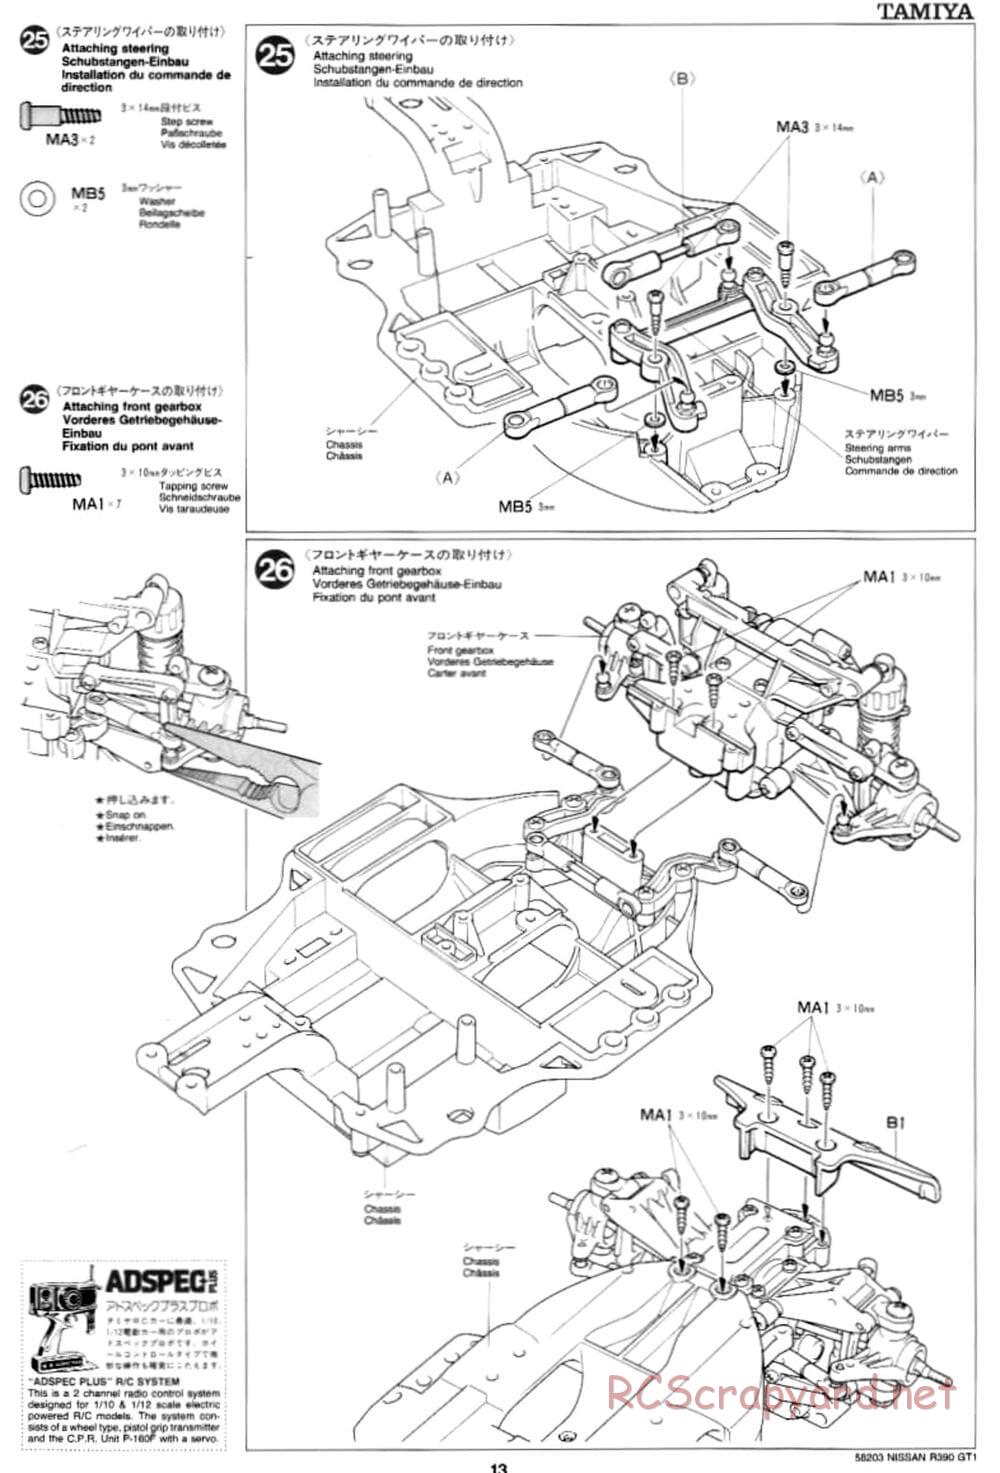 Tamiya - Nissan R390 GT1 - TA-03R Chassis - Manual - Page 13